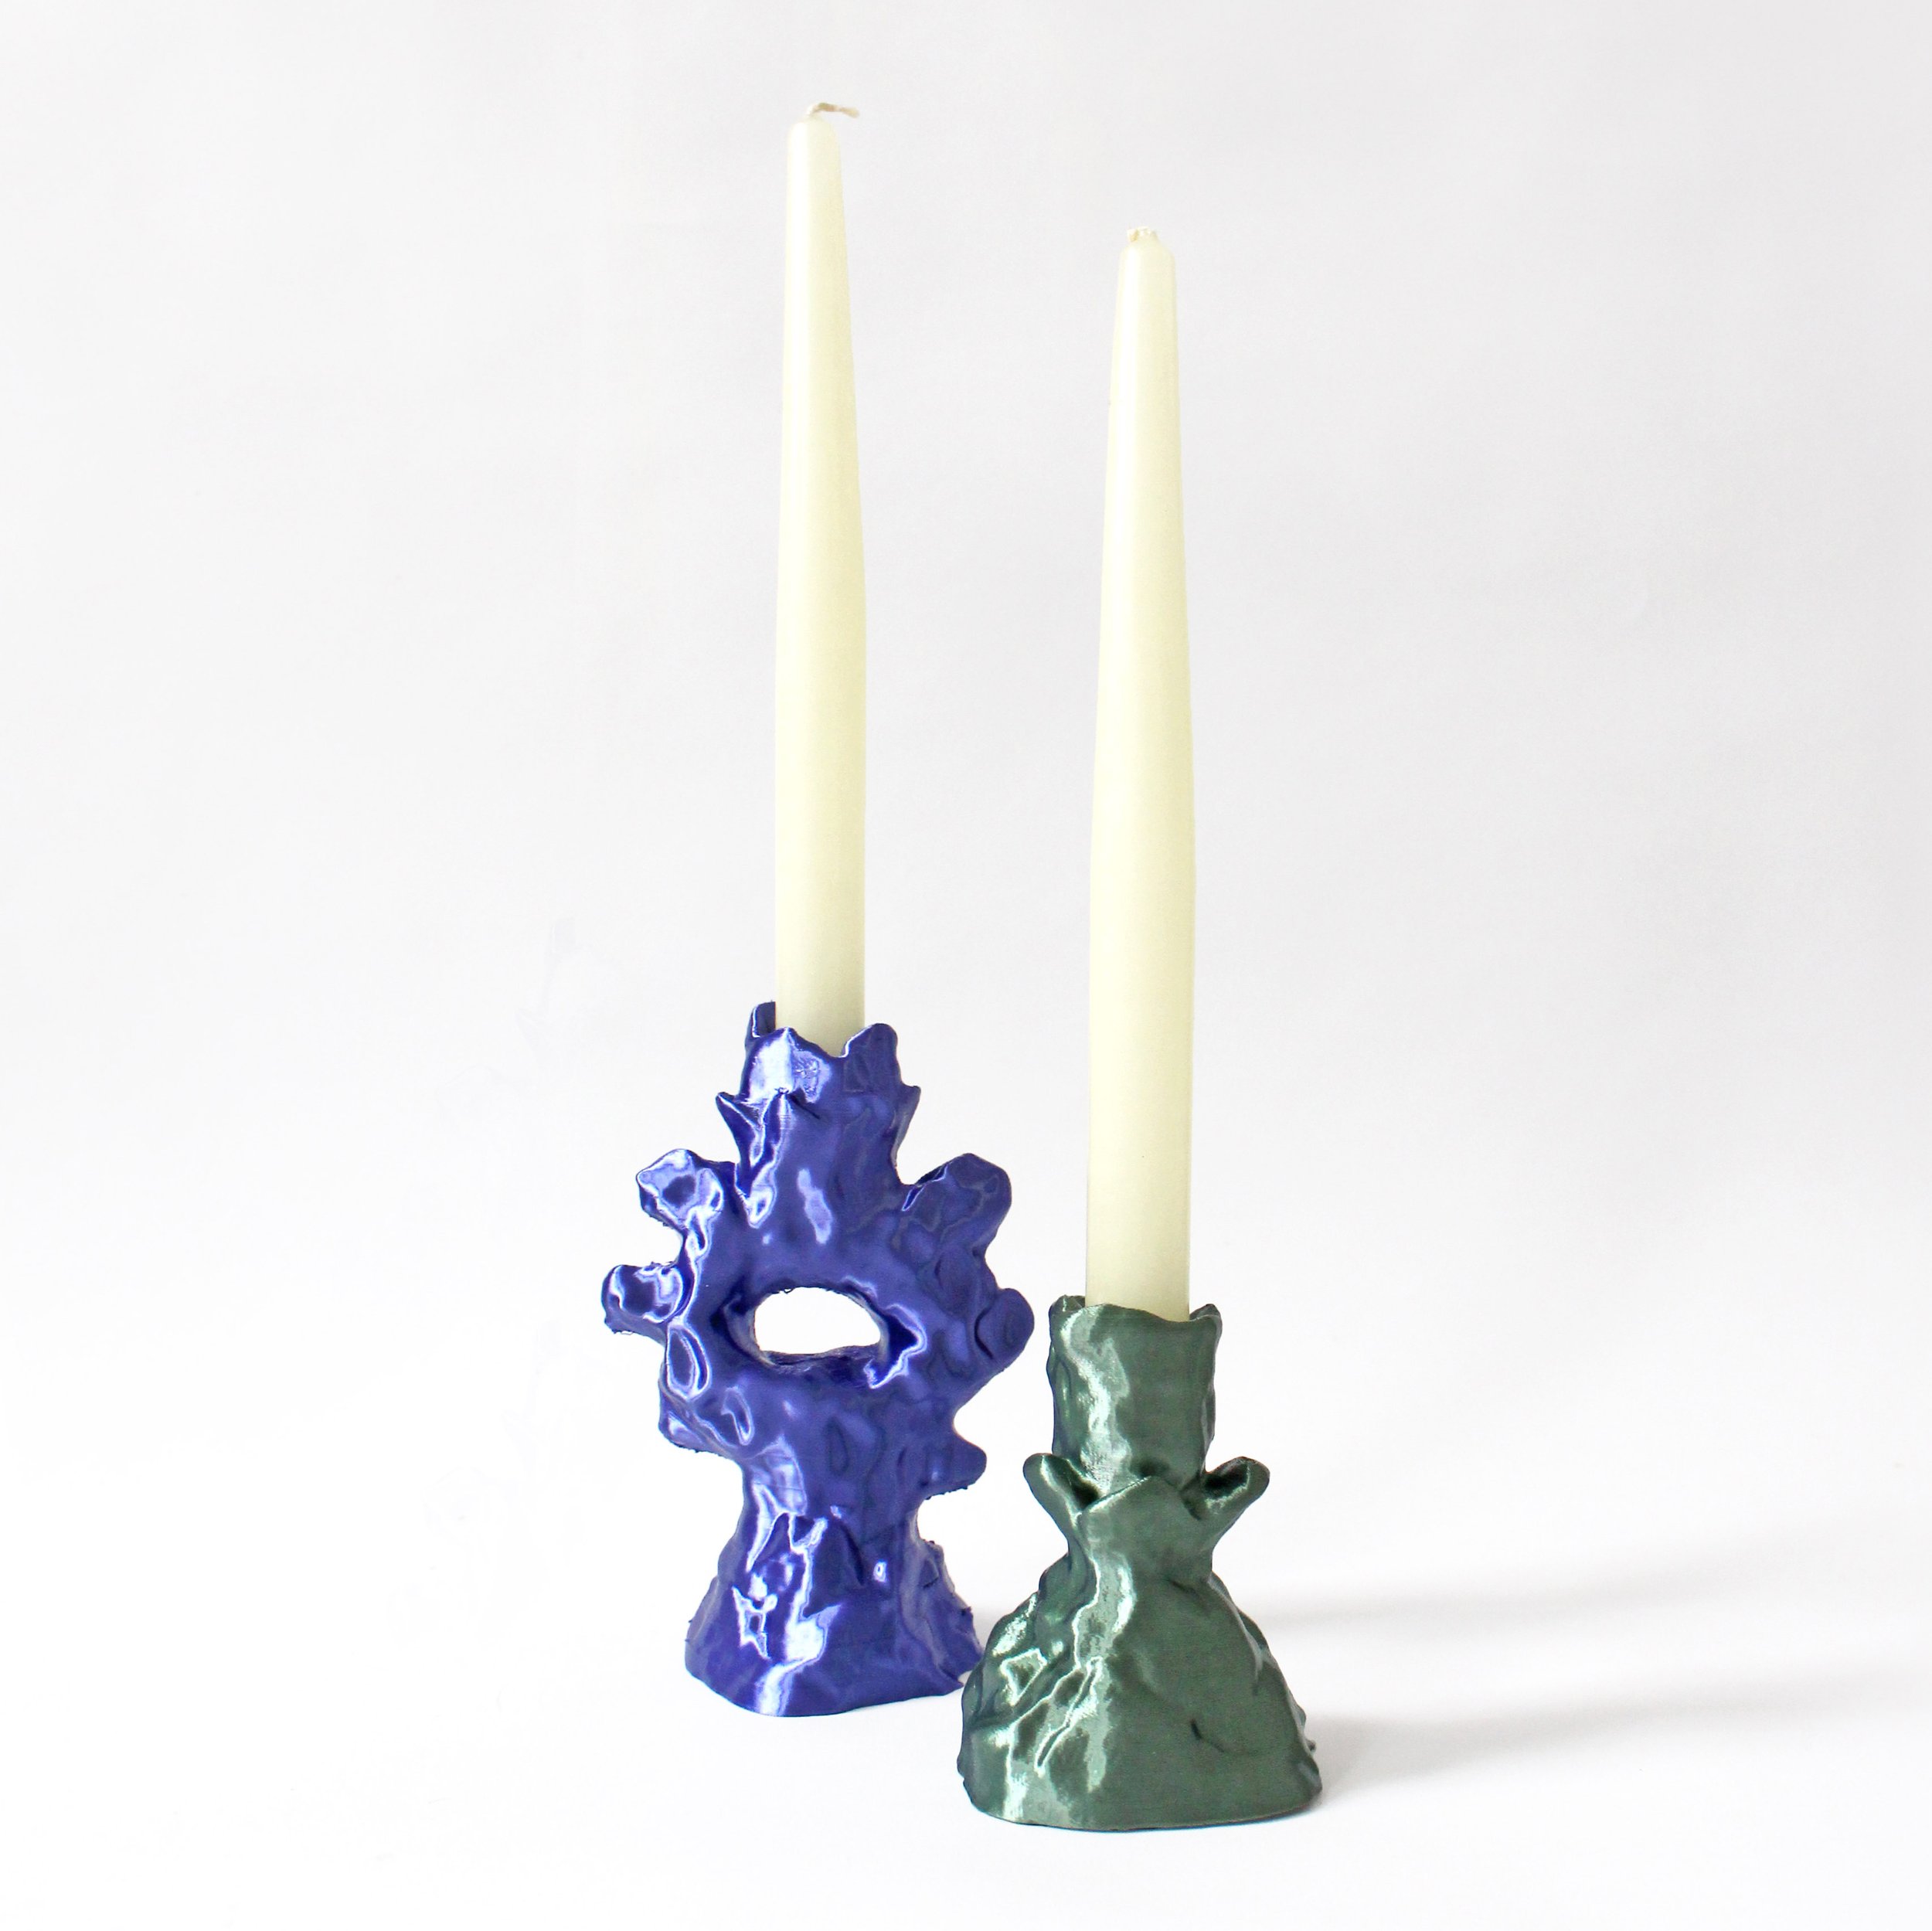 00_carre candlesticks-pair1.jpg